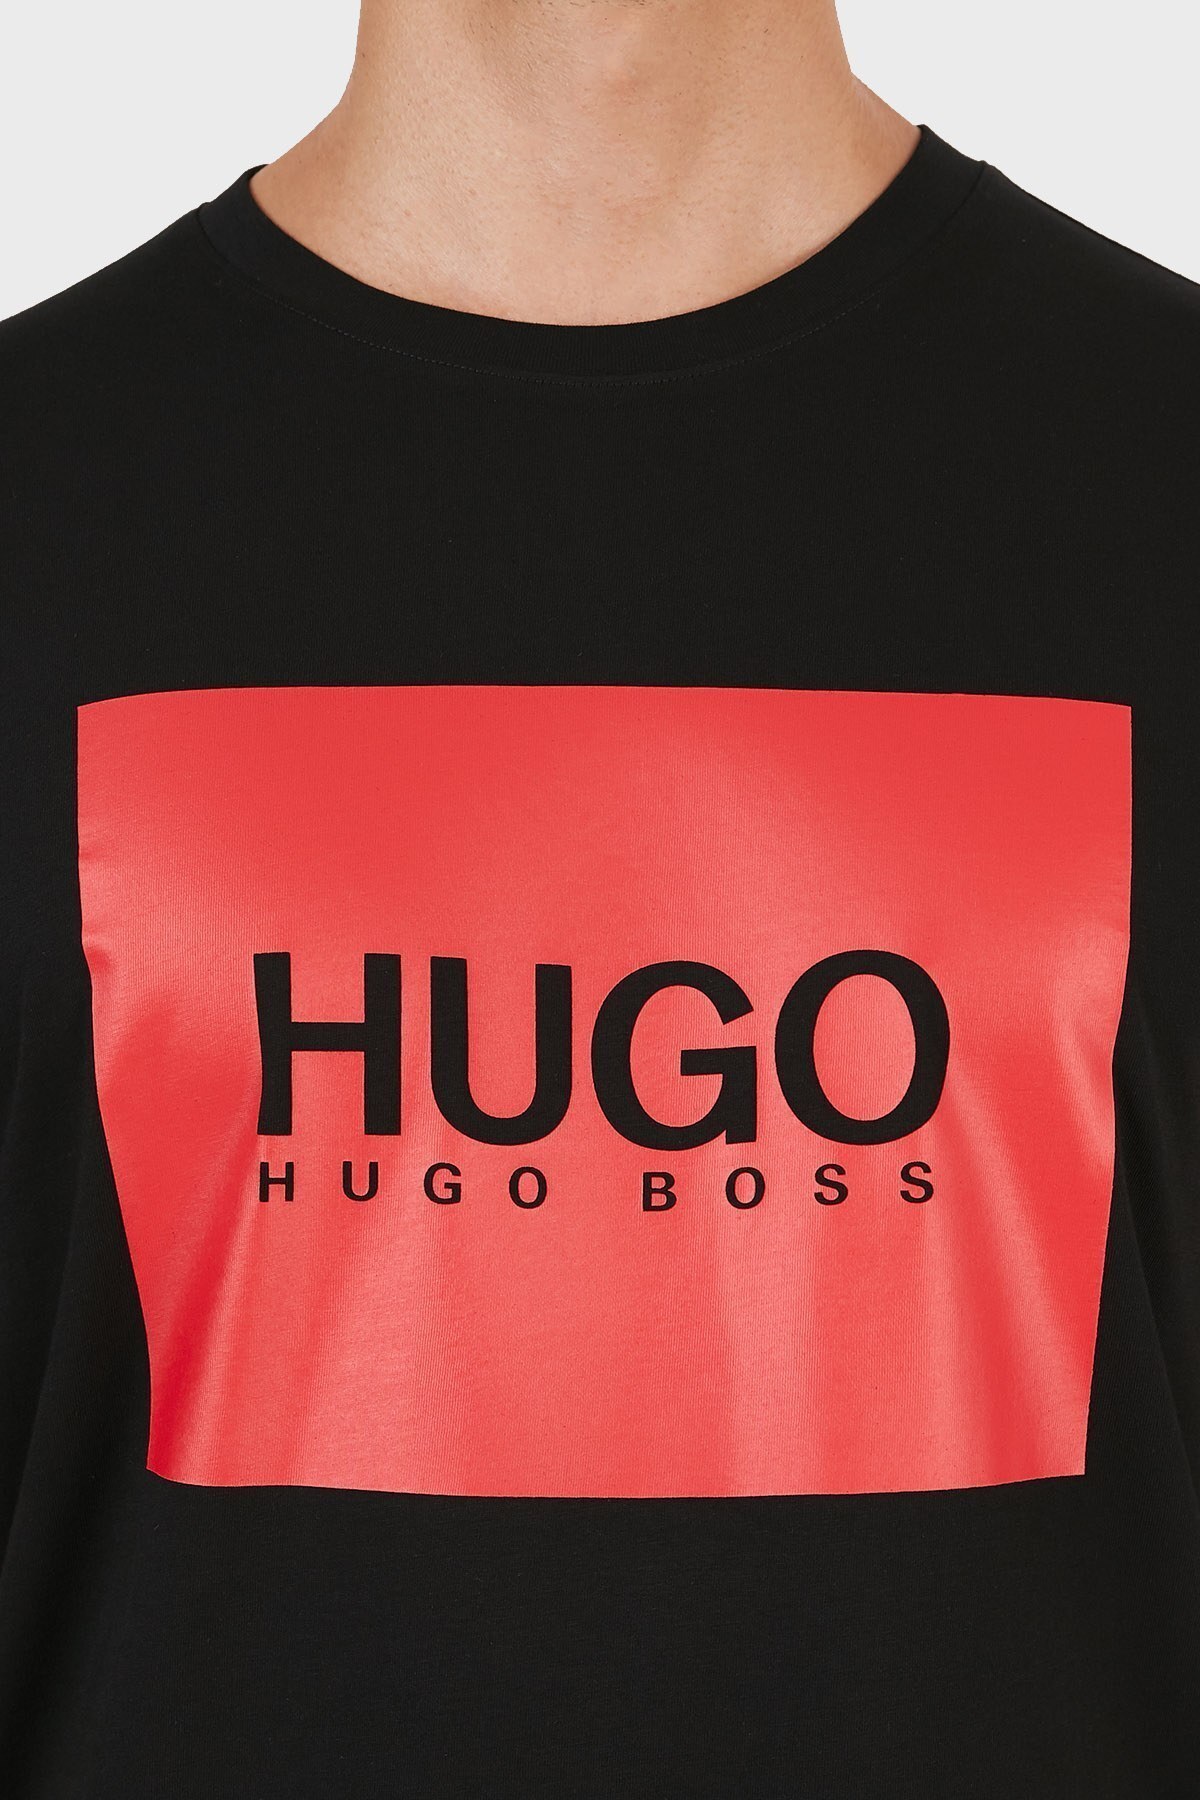 Hugo Boss Regular Fit Baskılı Bisiklet Yaka % 100 Pamuk Erkek T Shirt 50456378 001 SİYAH